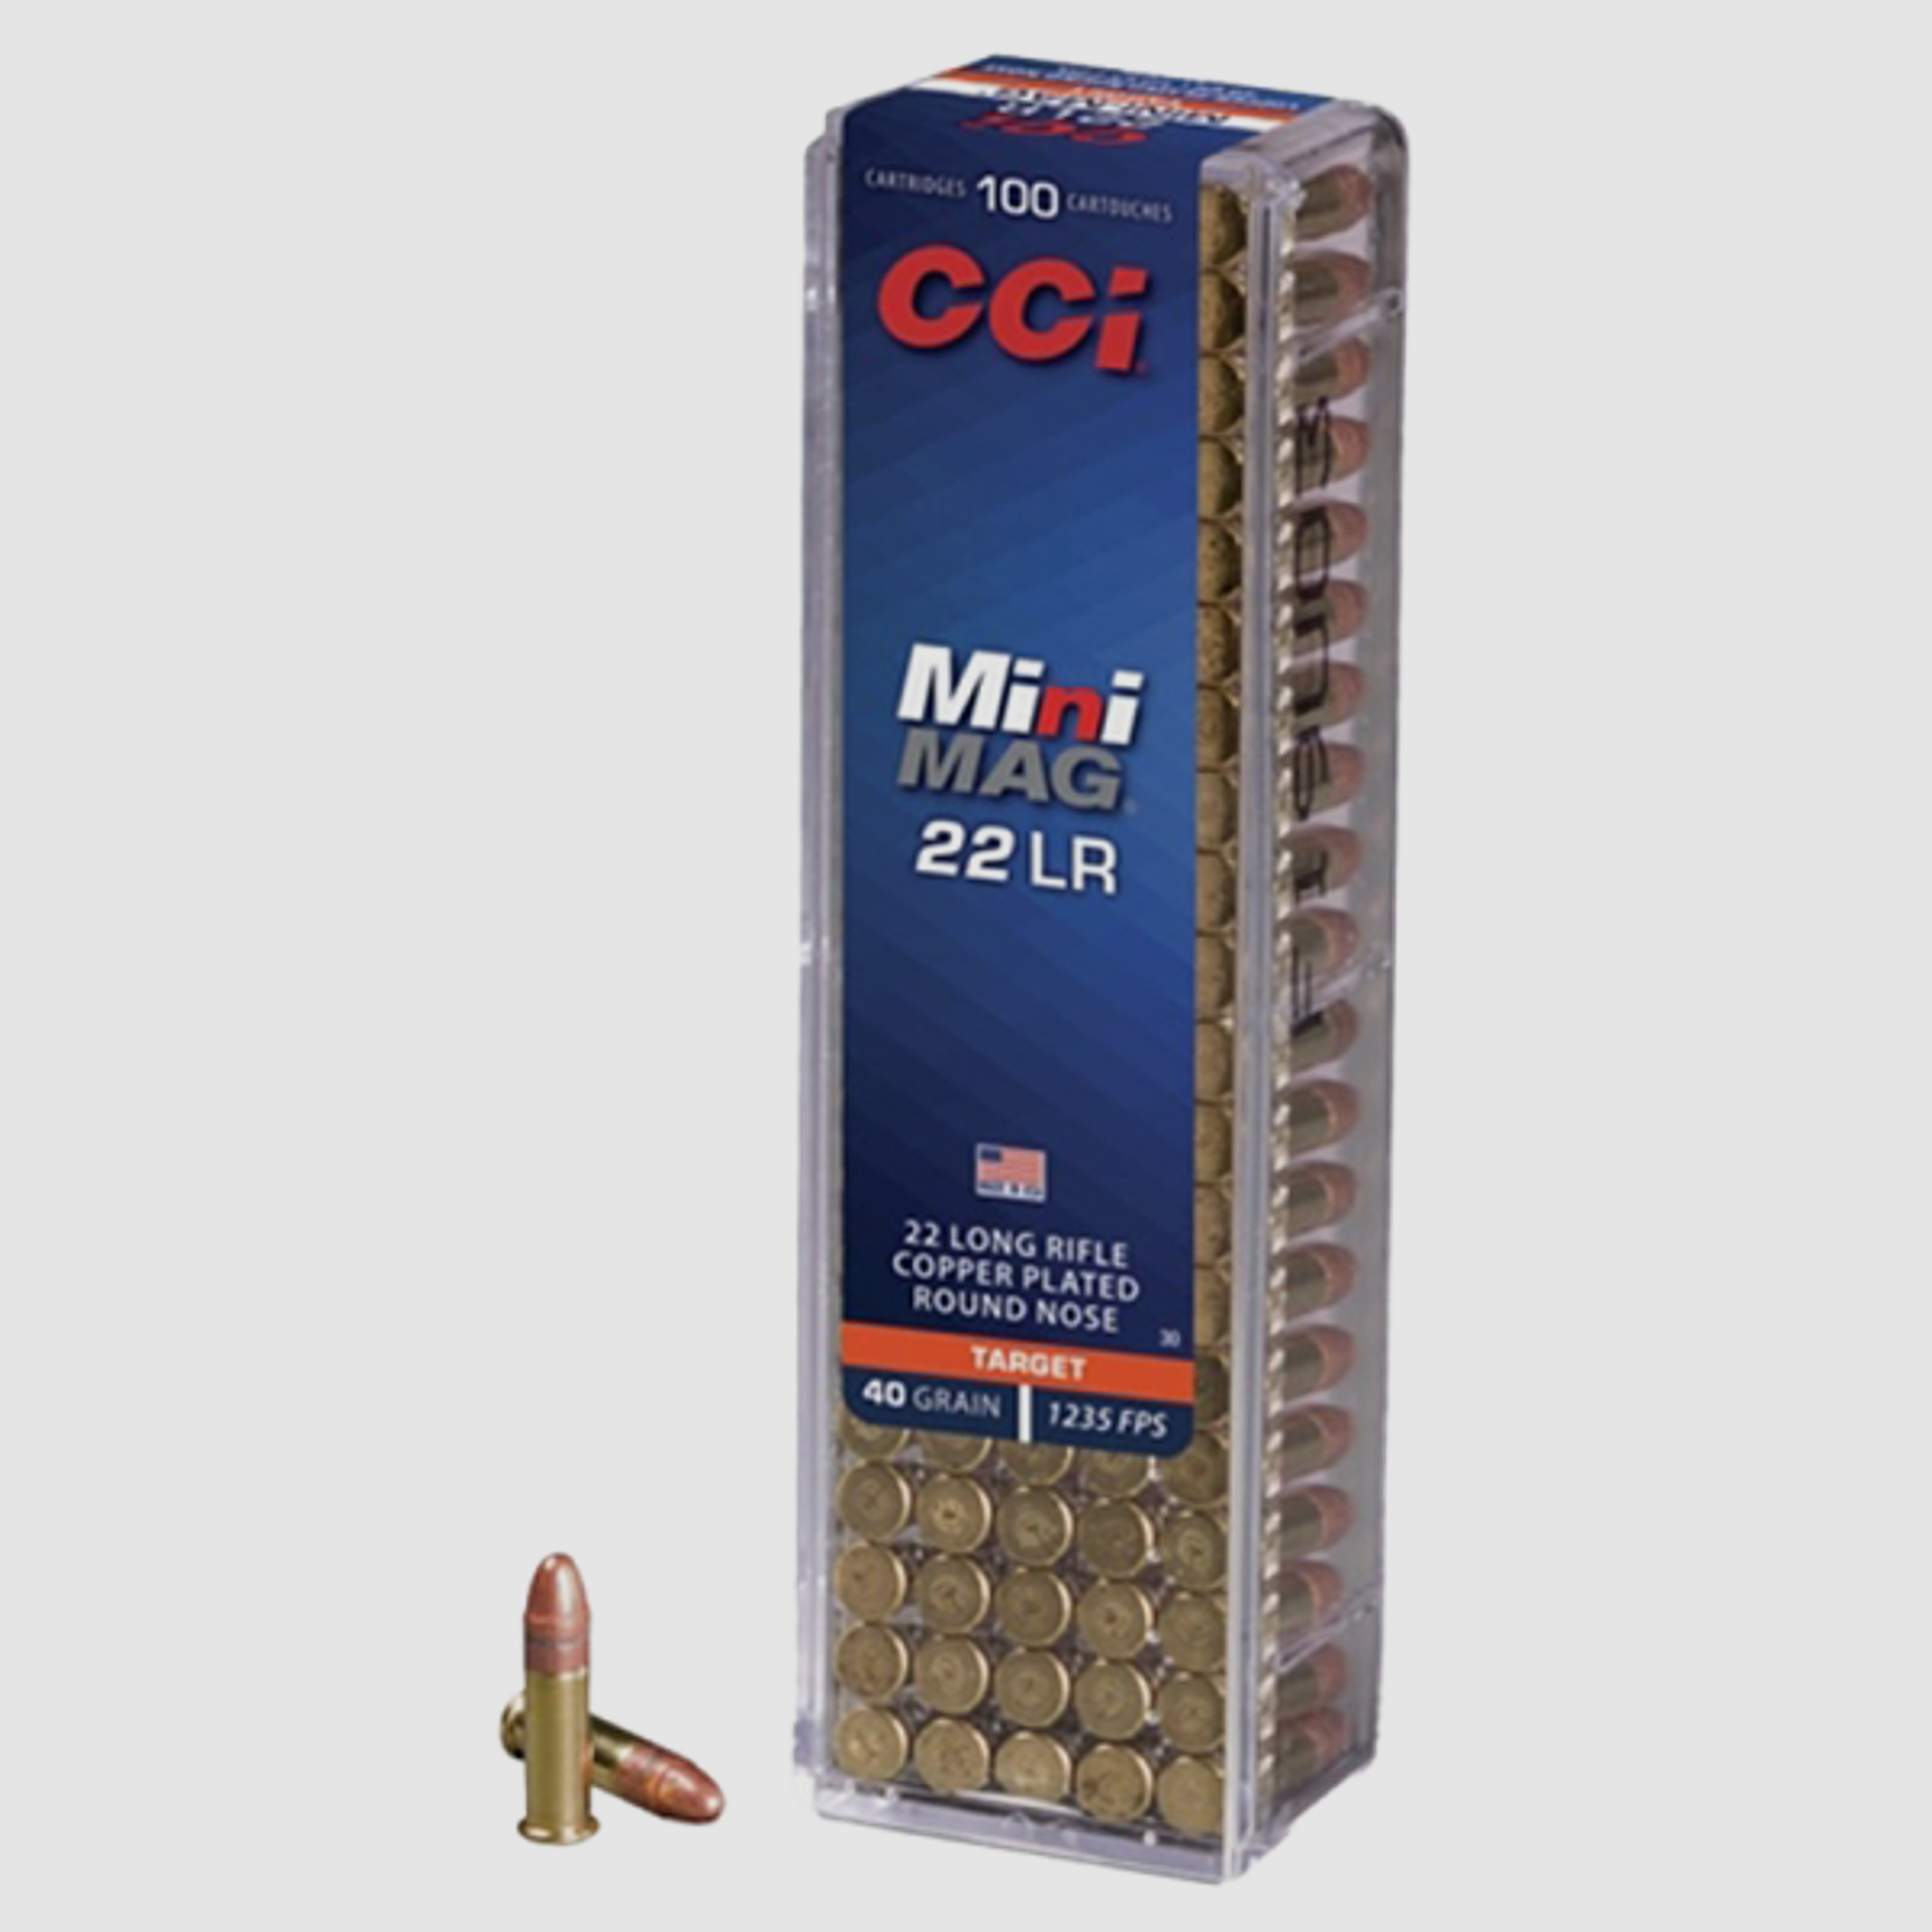 CCI Mini Mag .22 LR CPRN 40 grs Kleinkaliberpatronen